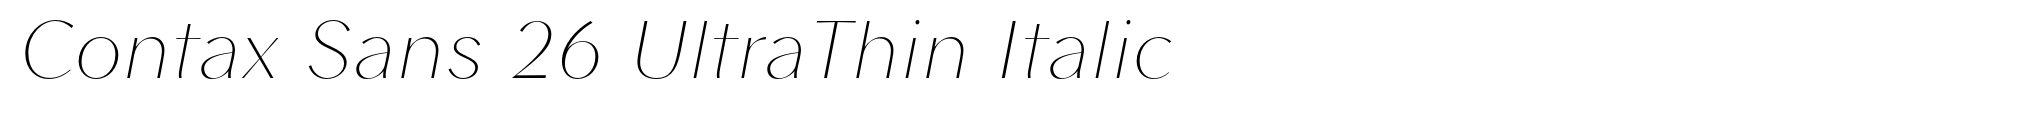 Contax Sans 26 UltraThin Italic image